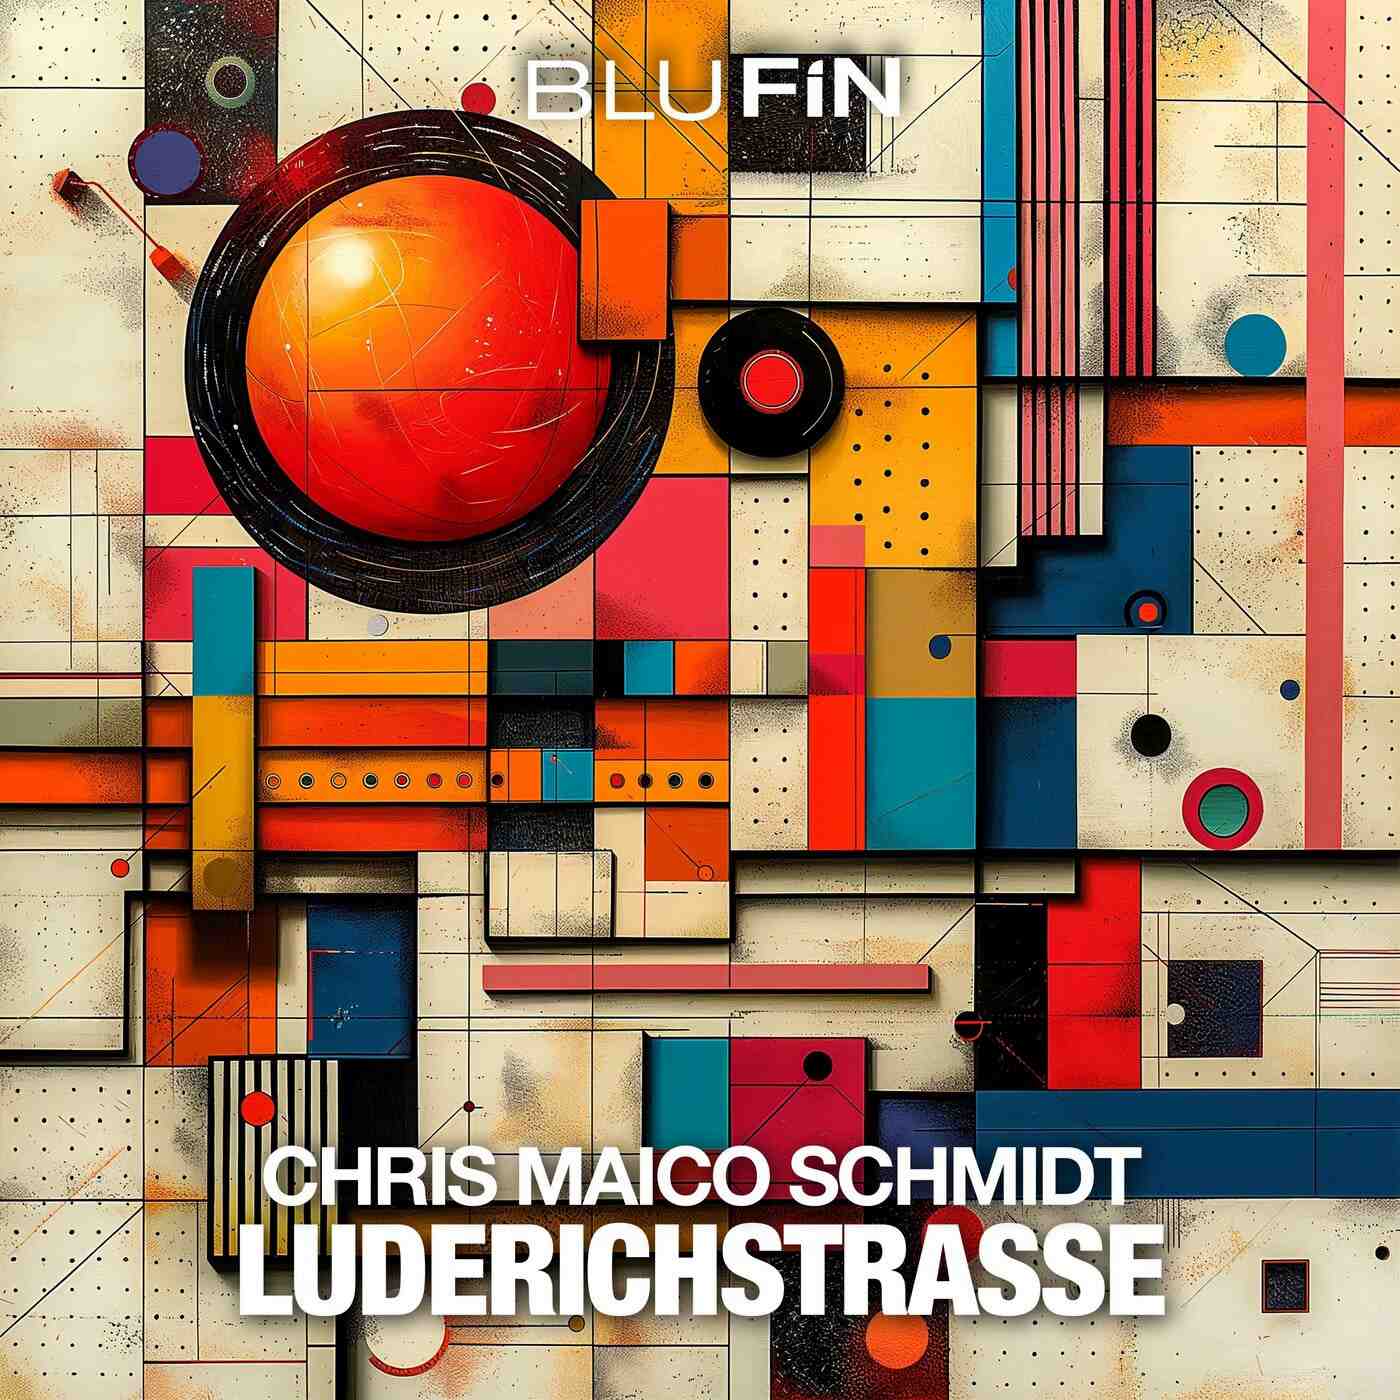 Chris Maico Schmidt - Luderichstrasse 31 (Original Mix)